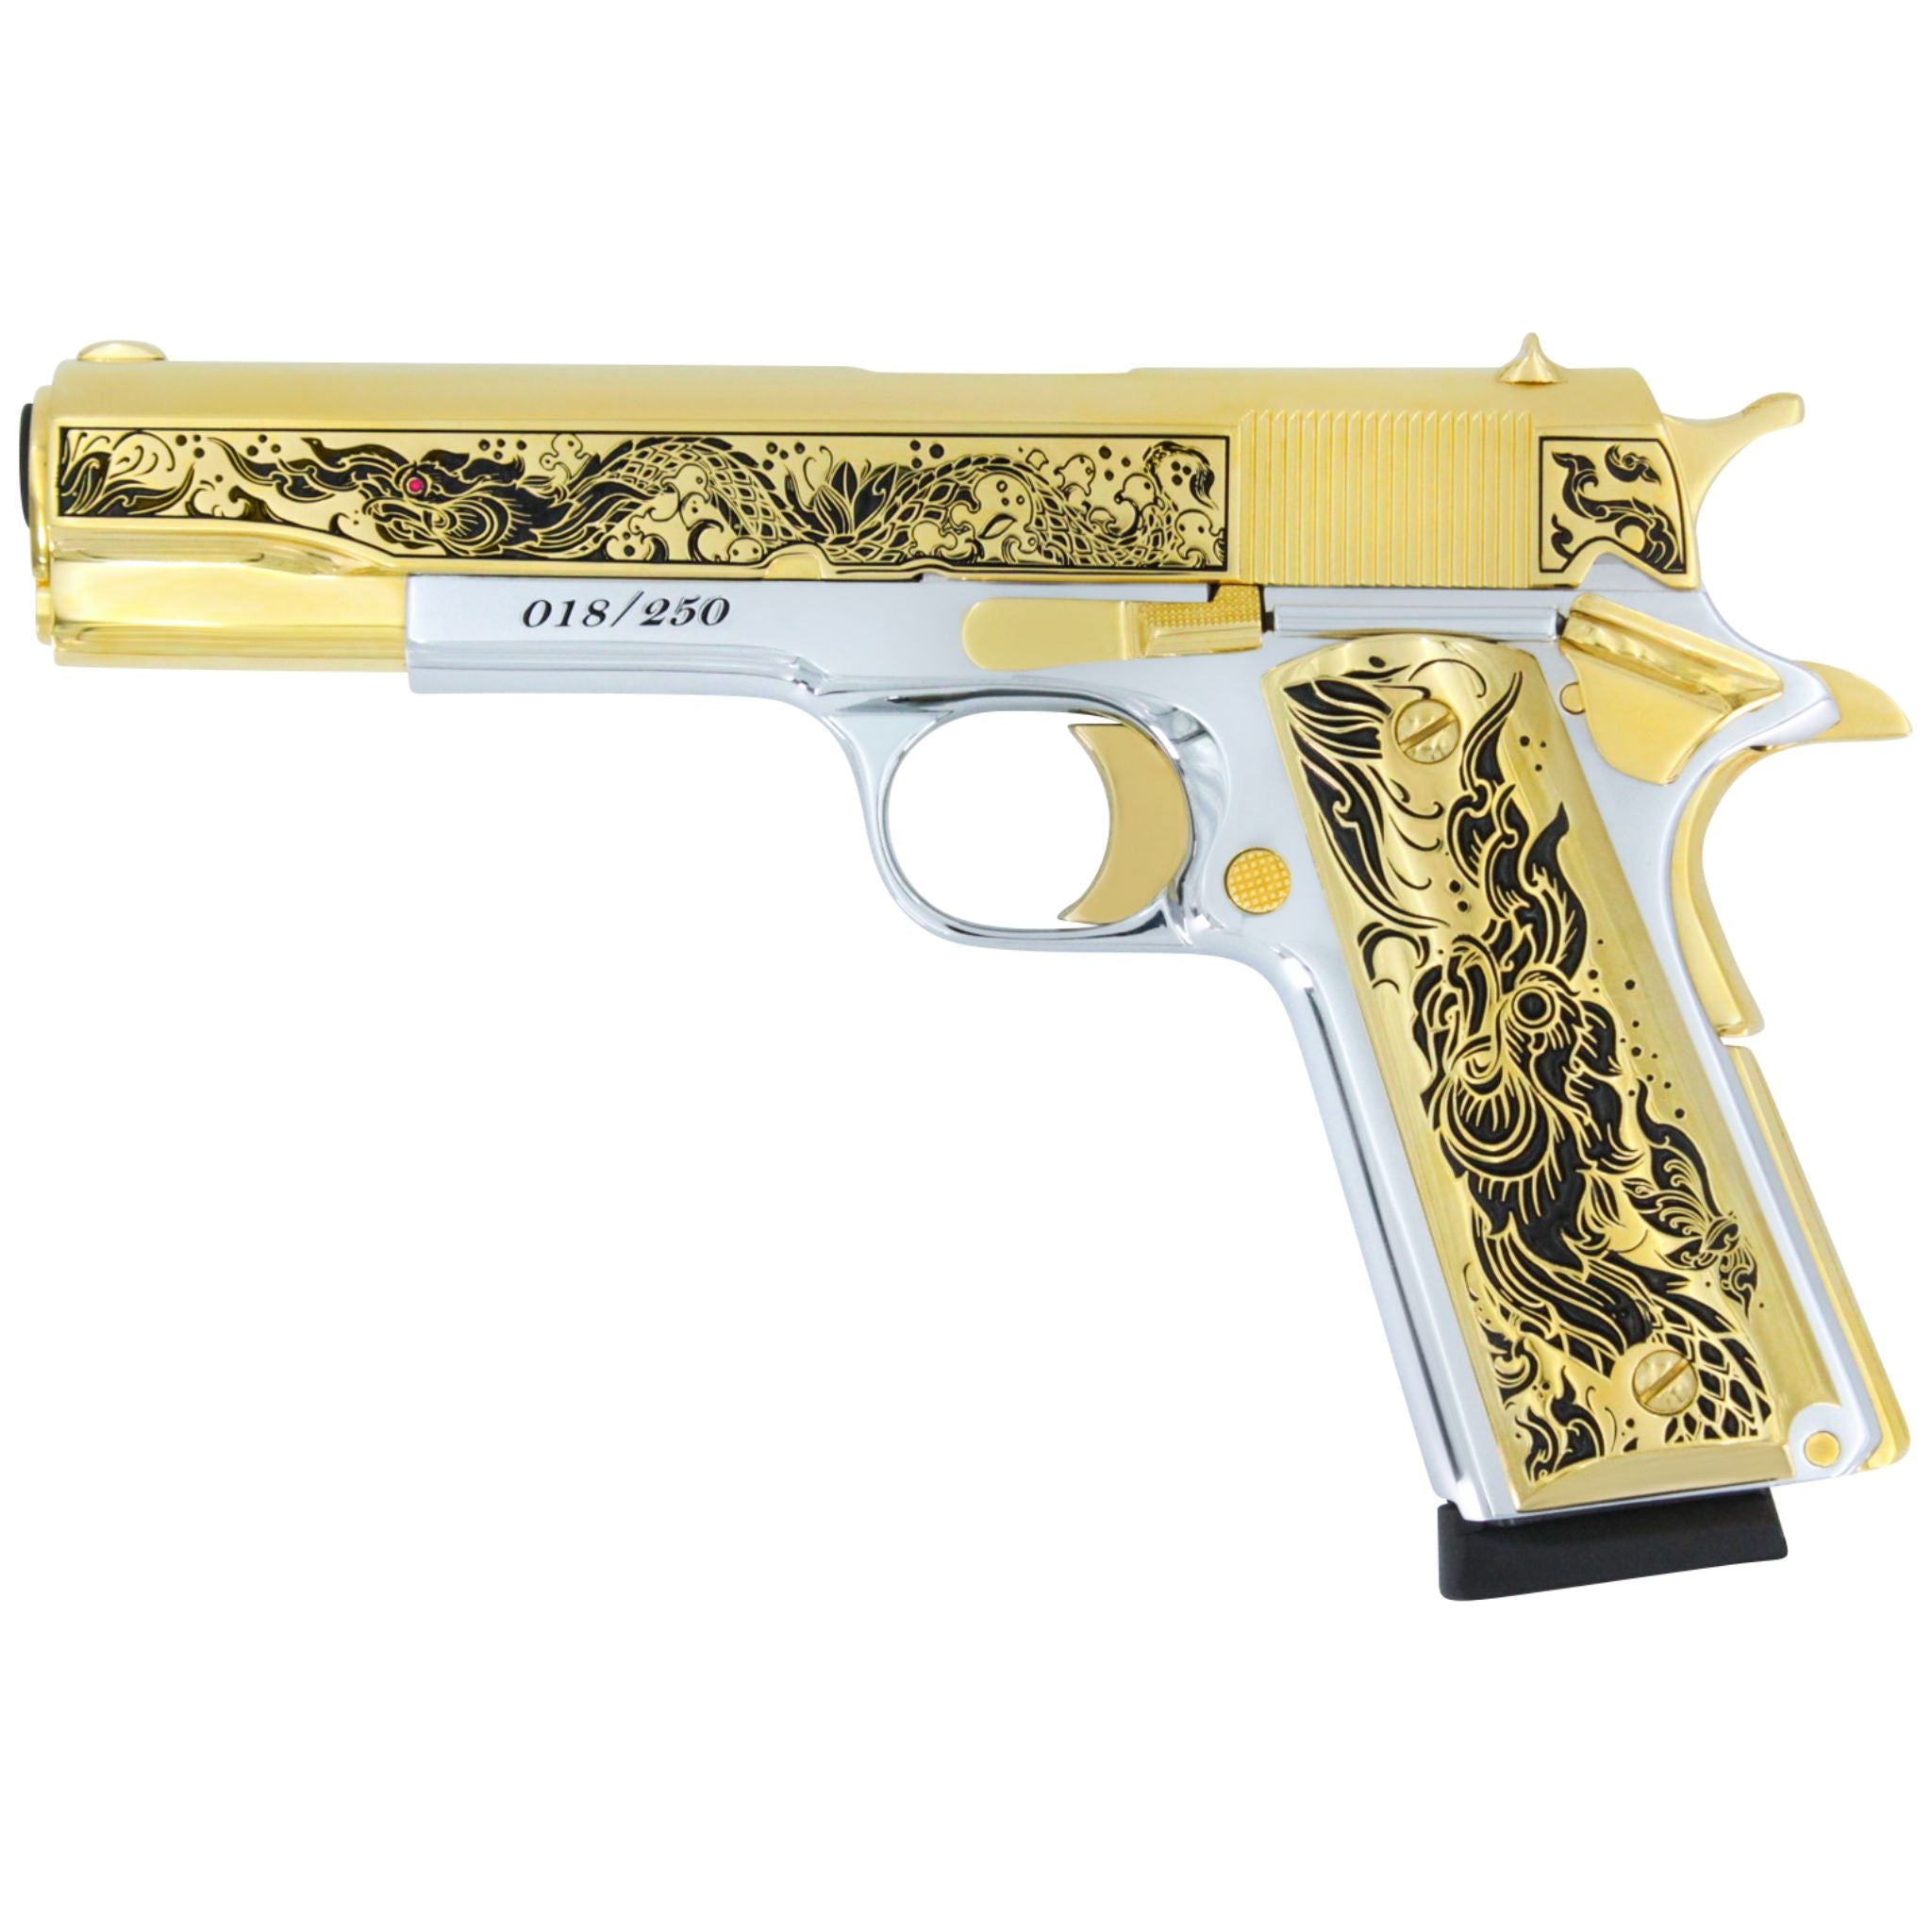 Rock Island 1911-A1, 45ACP, Naga Warrior with Ruby, 24K Gold Plated Slide & Accents with High Polished White Chrome Frame, SKU: 6736103309414, 24 karat gold gun, 24 Karat Gold Firearm, California compliant handguns